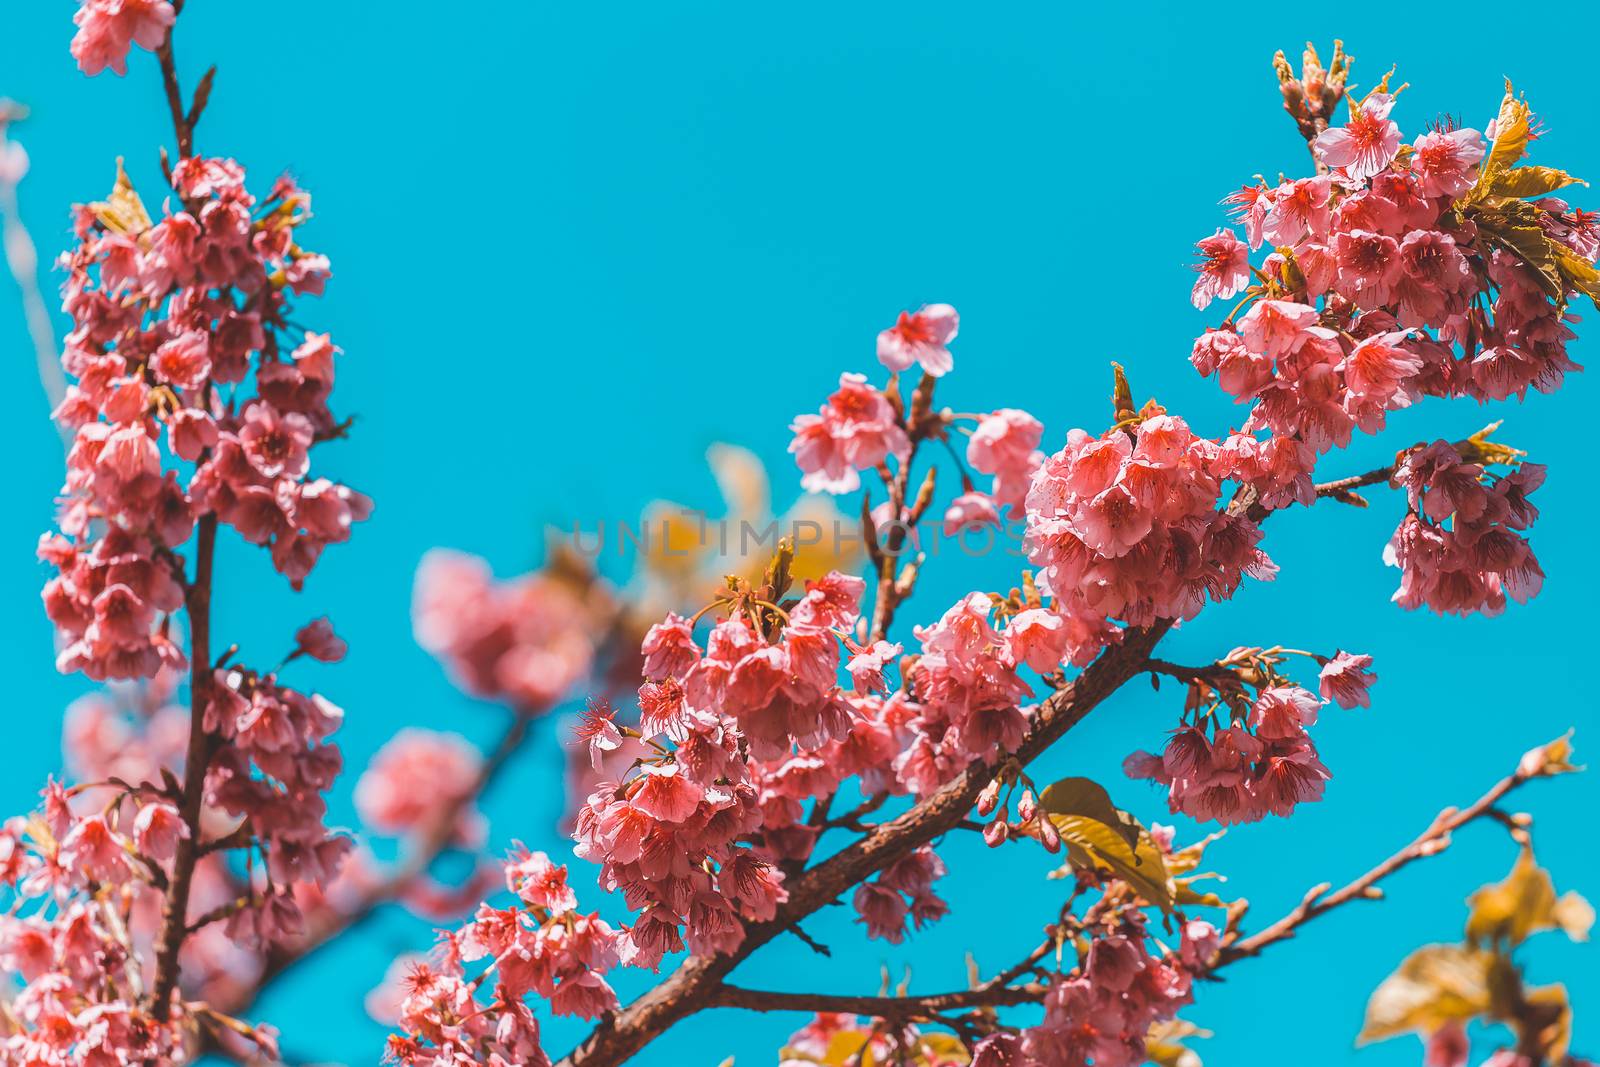 Cherry Blossom and Sakura wallpaper by freedomnaruk